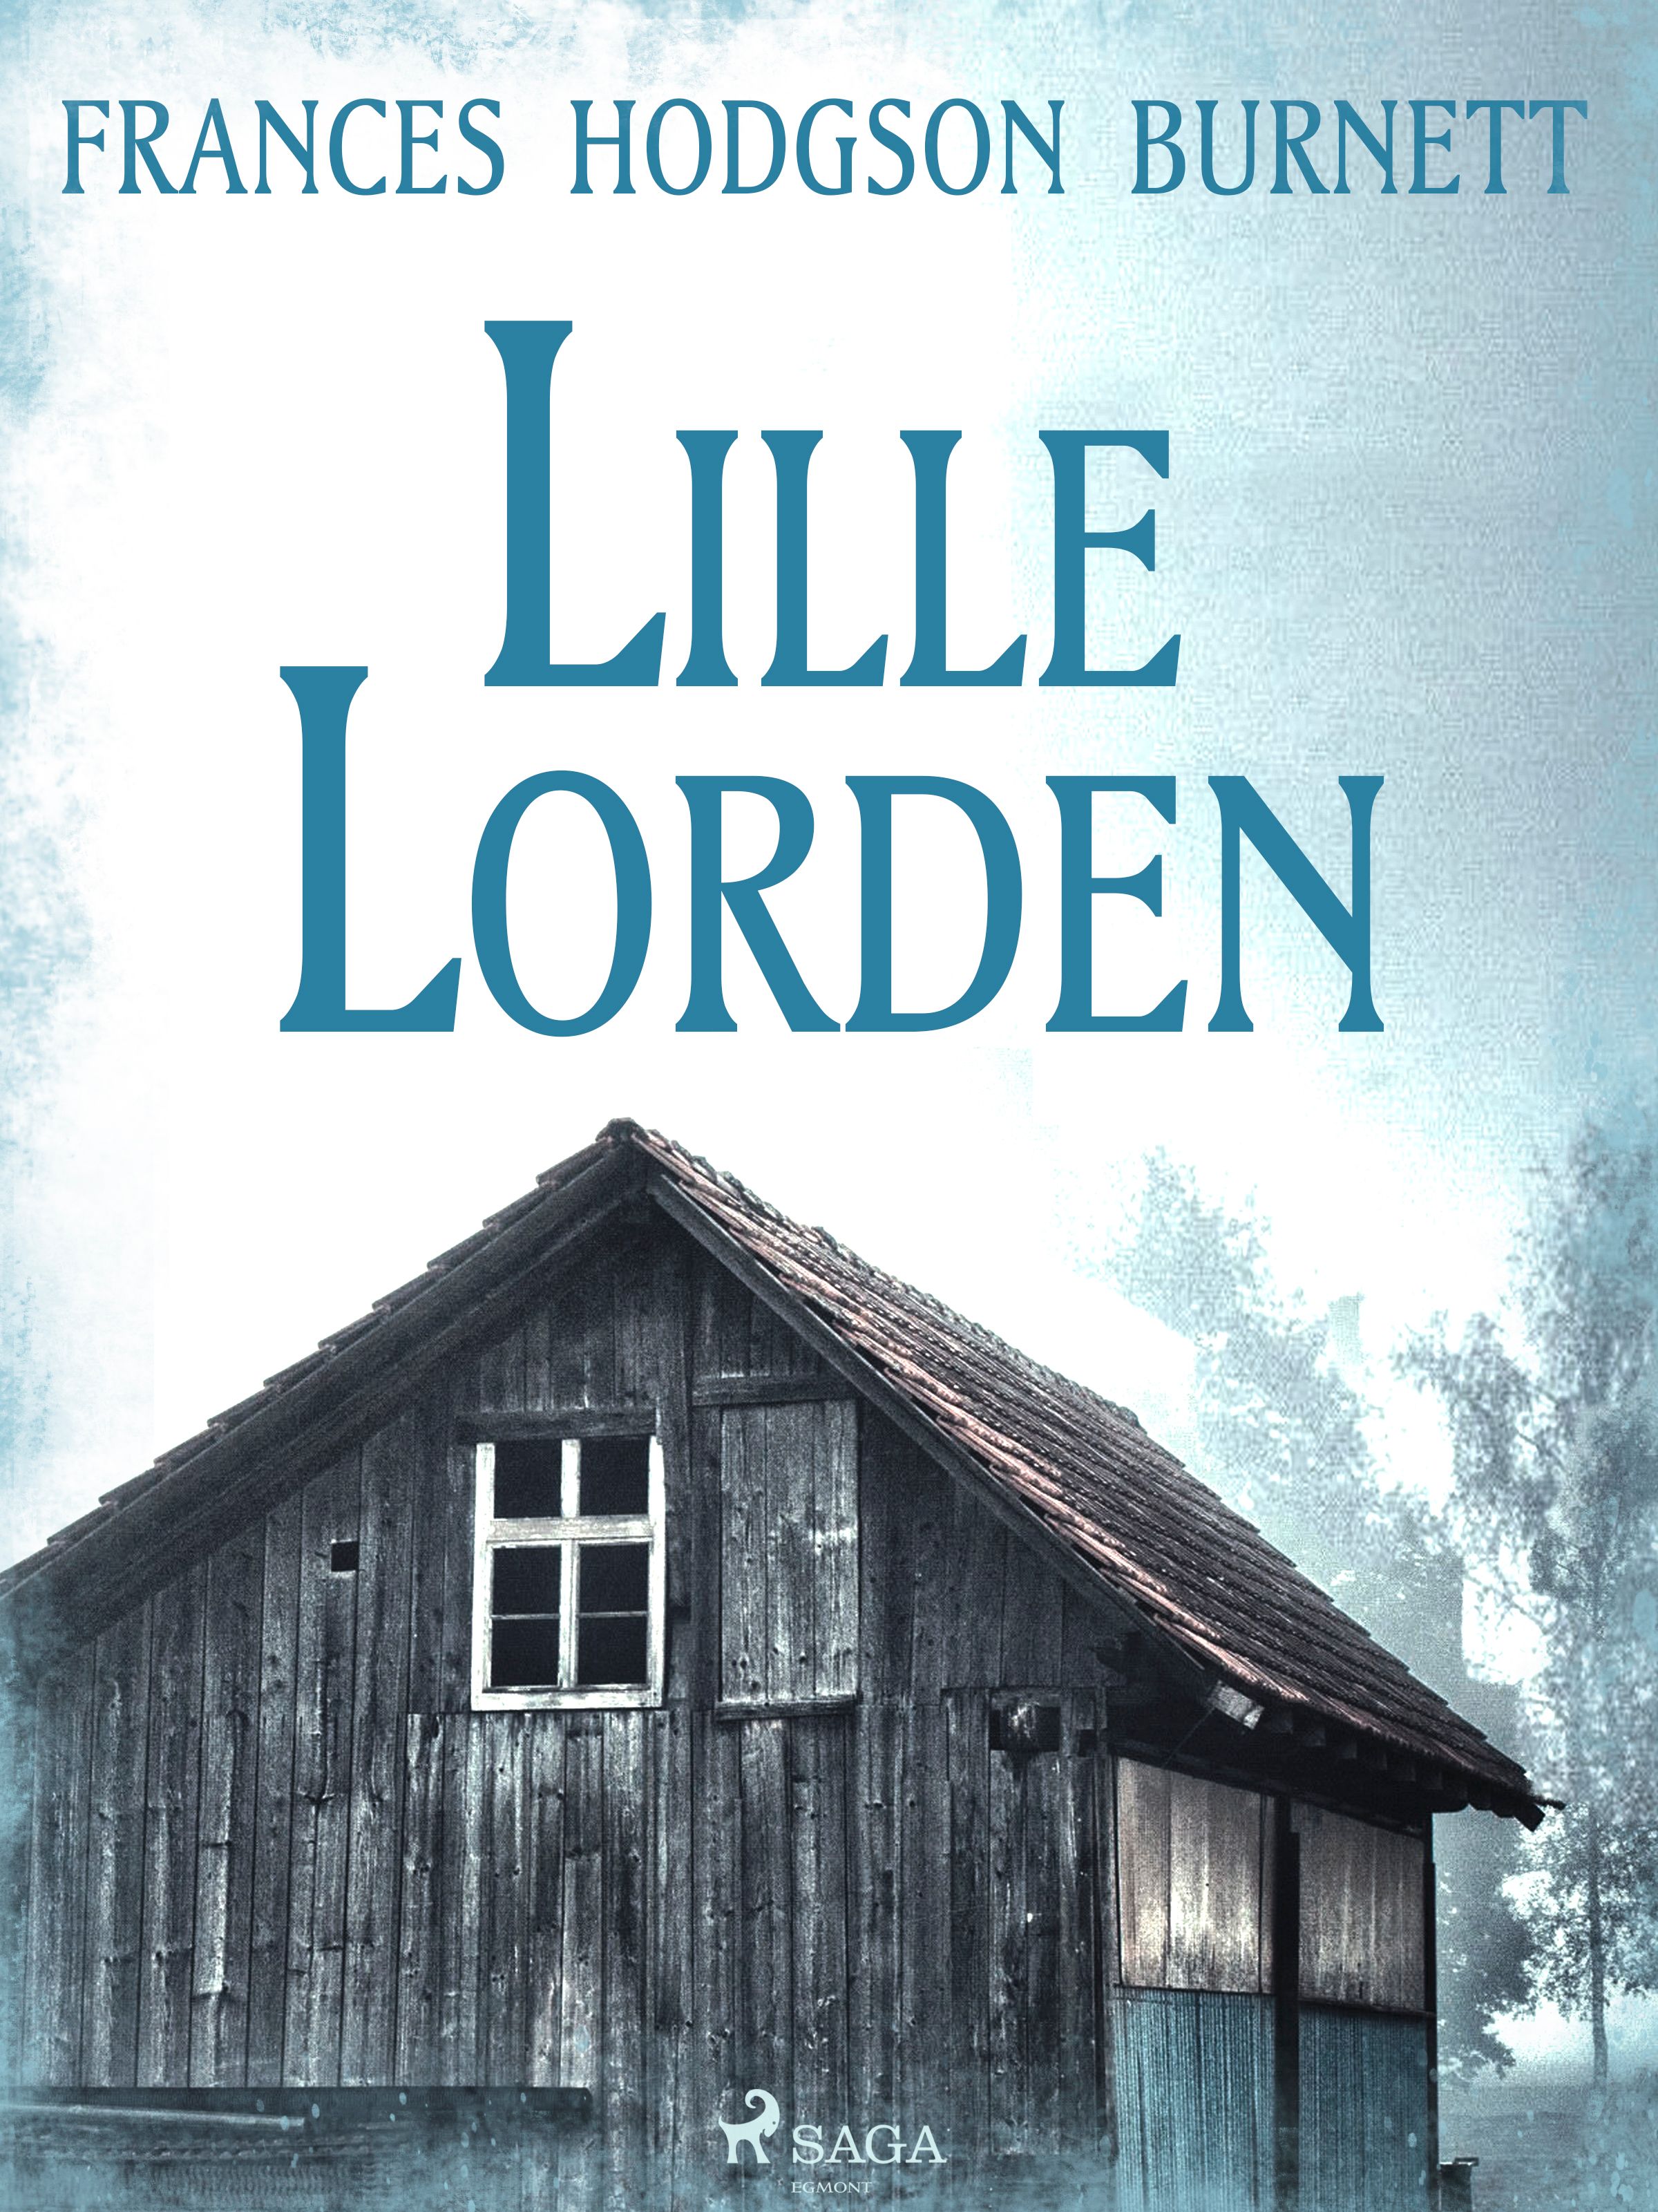 Lille lorden, eBook by Frances Hodgson Burnett